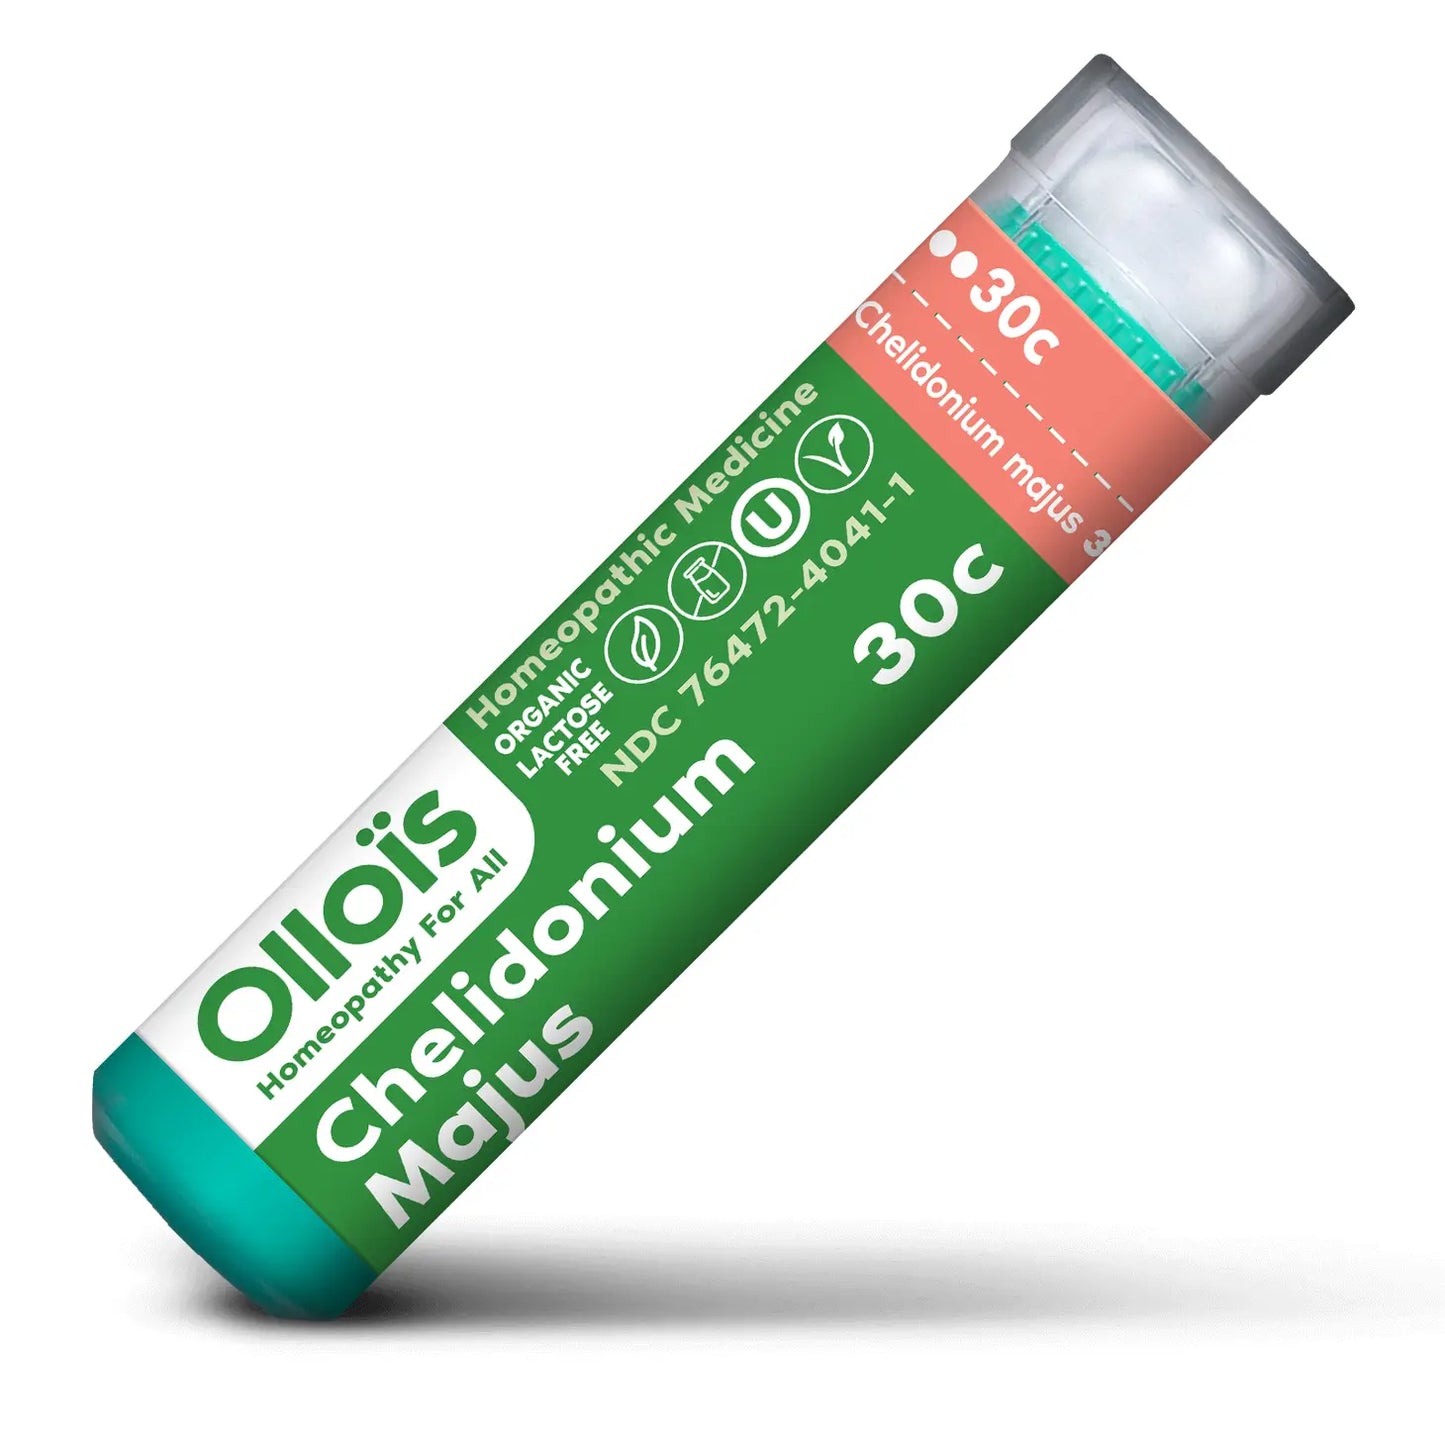 Olloïs Chelidonium Majus 30c Organic & Lactose-Free, 80 Pel.